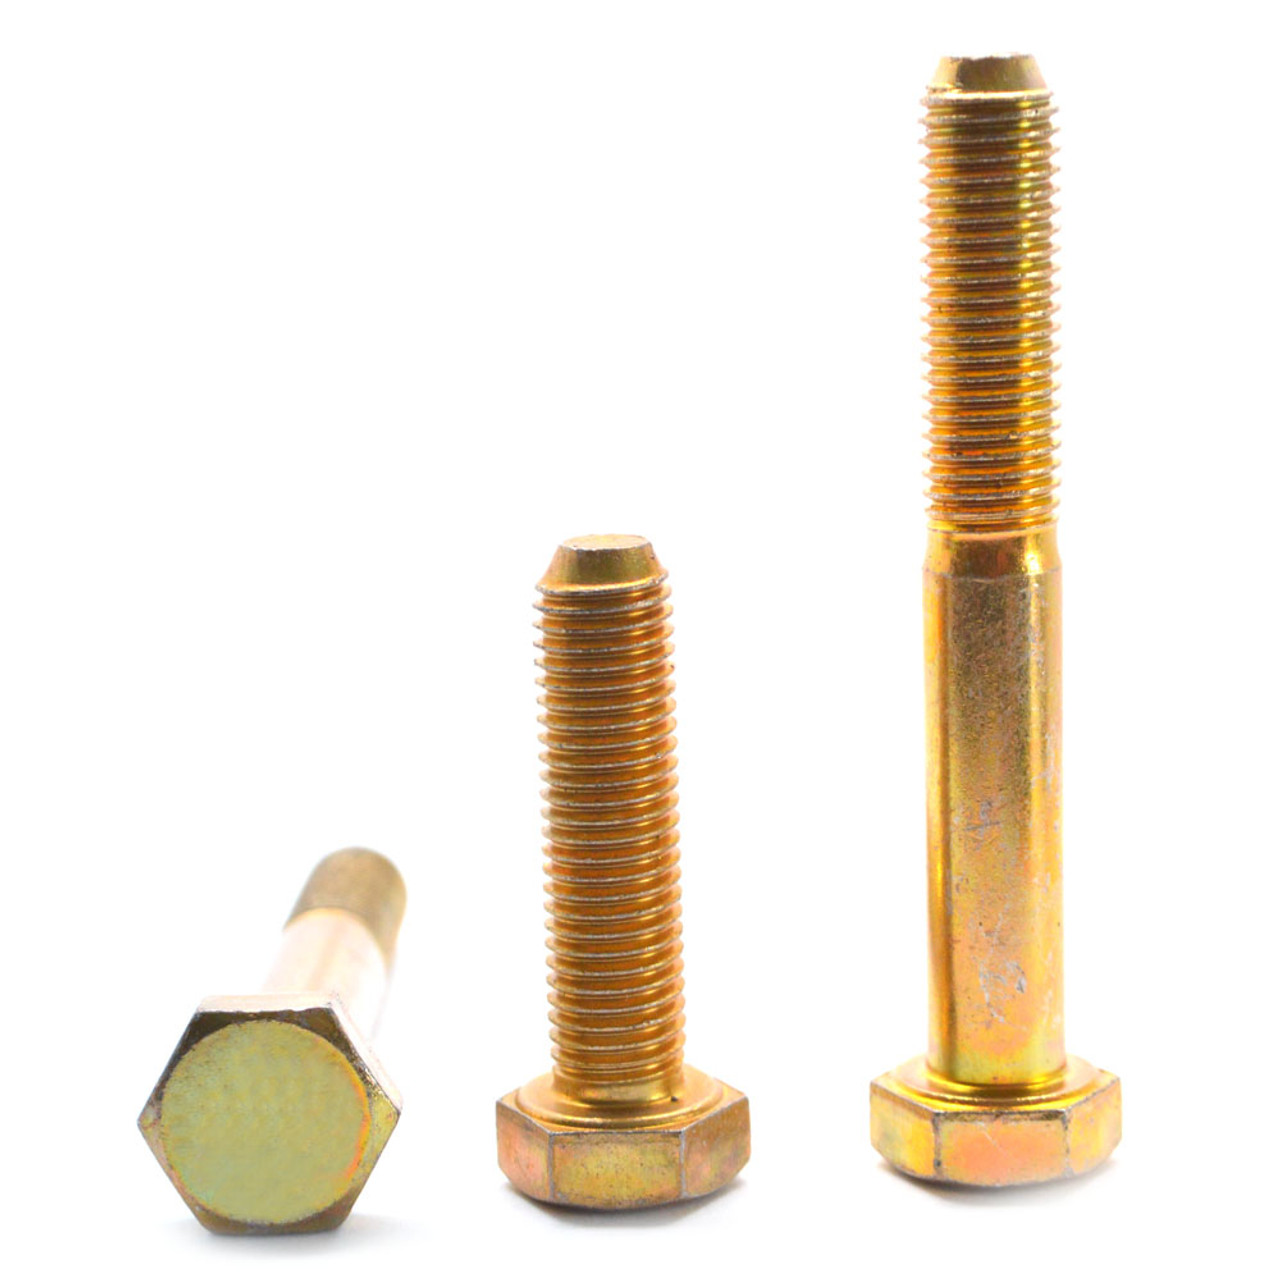 7/16"-14 x 3/4" (FT) Coarse Thread Grade 8 Hex Cap Screw (Bolt) Alloy Steel Yellow Zinc Plated